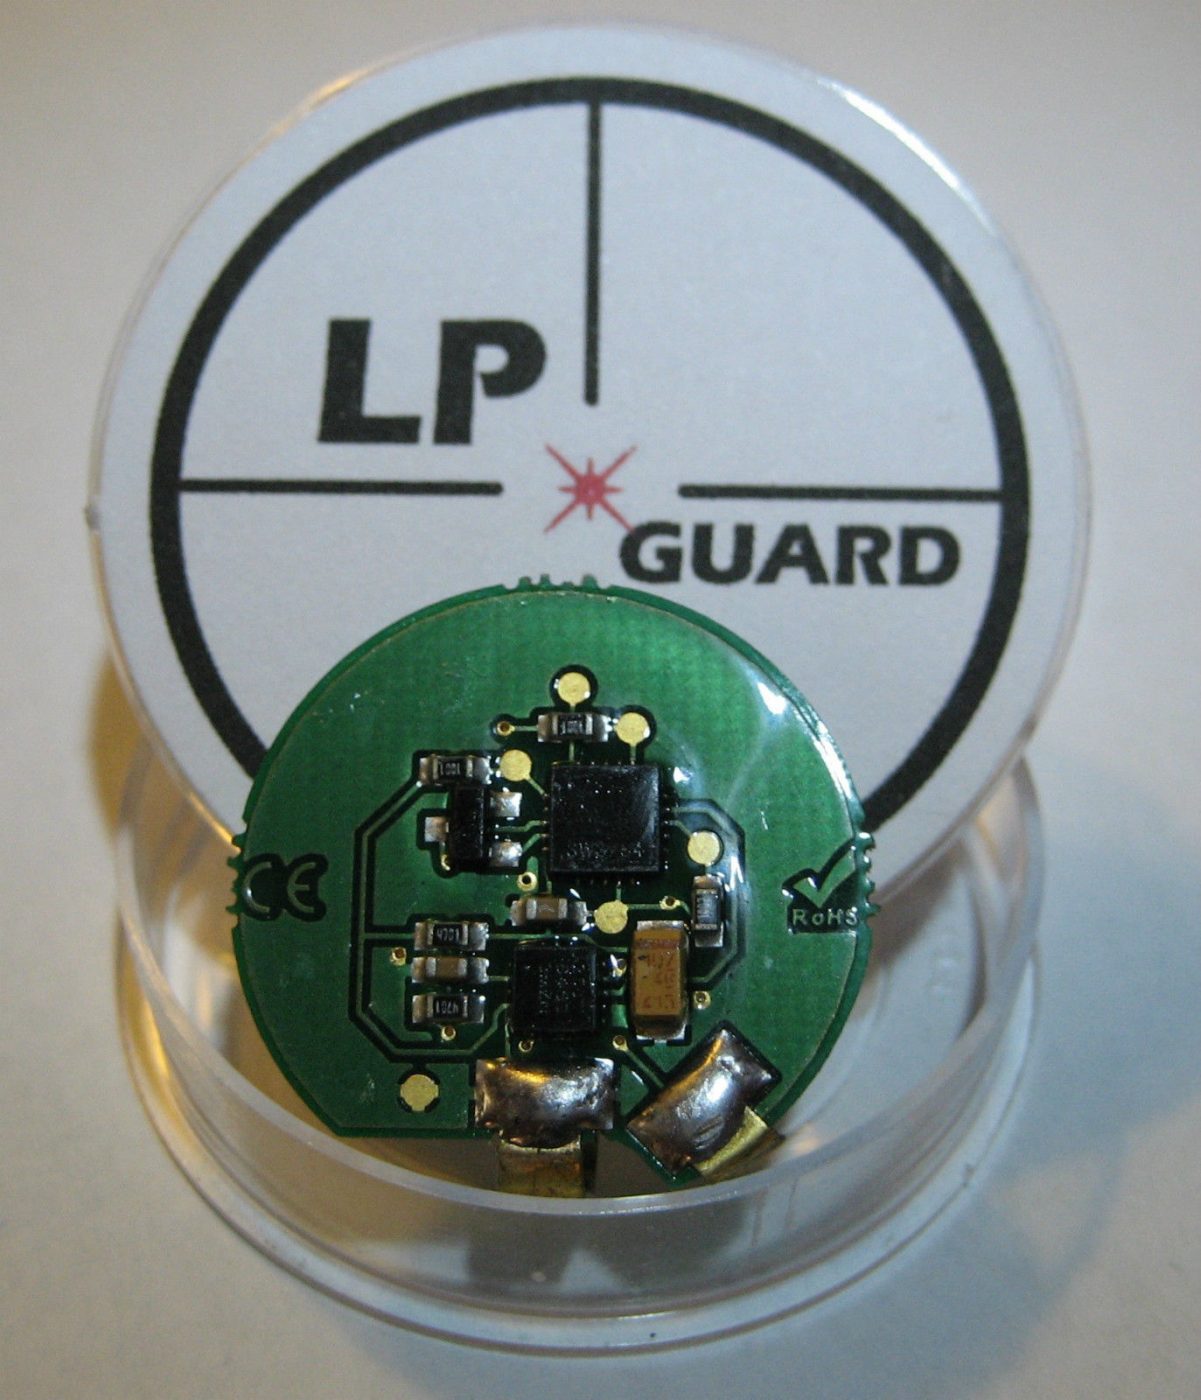 Der LP-Guard